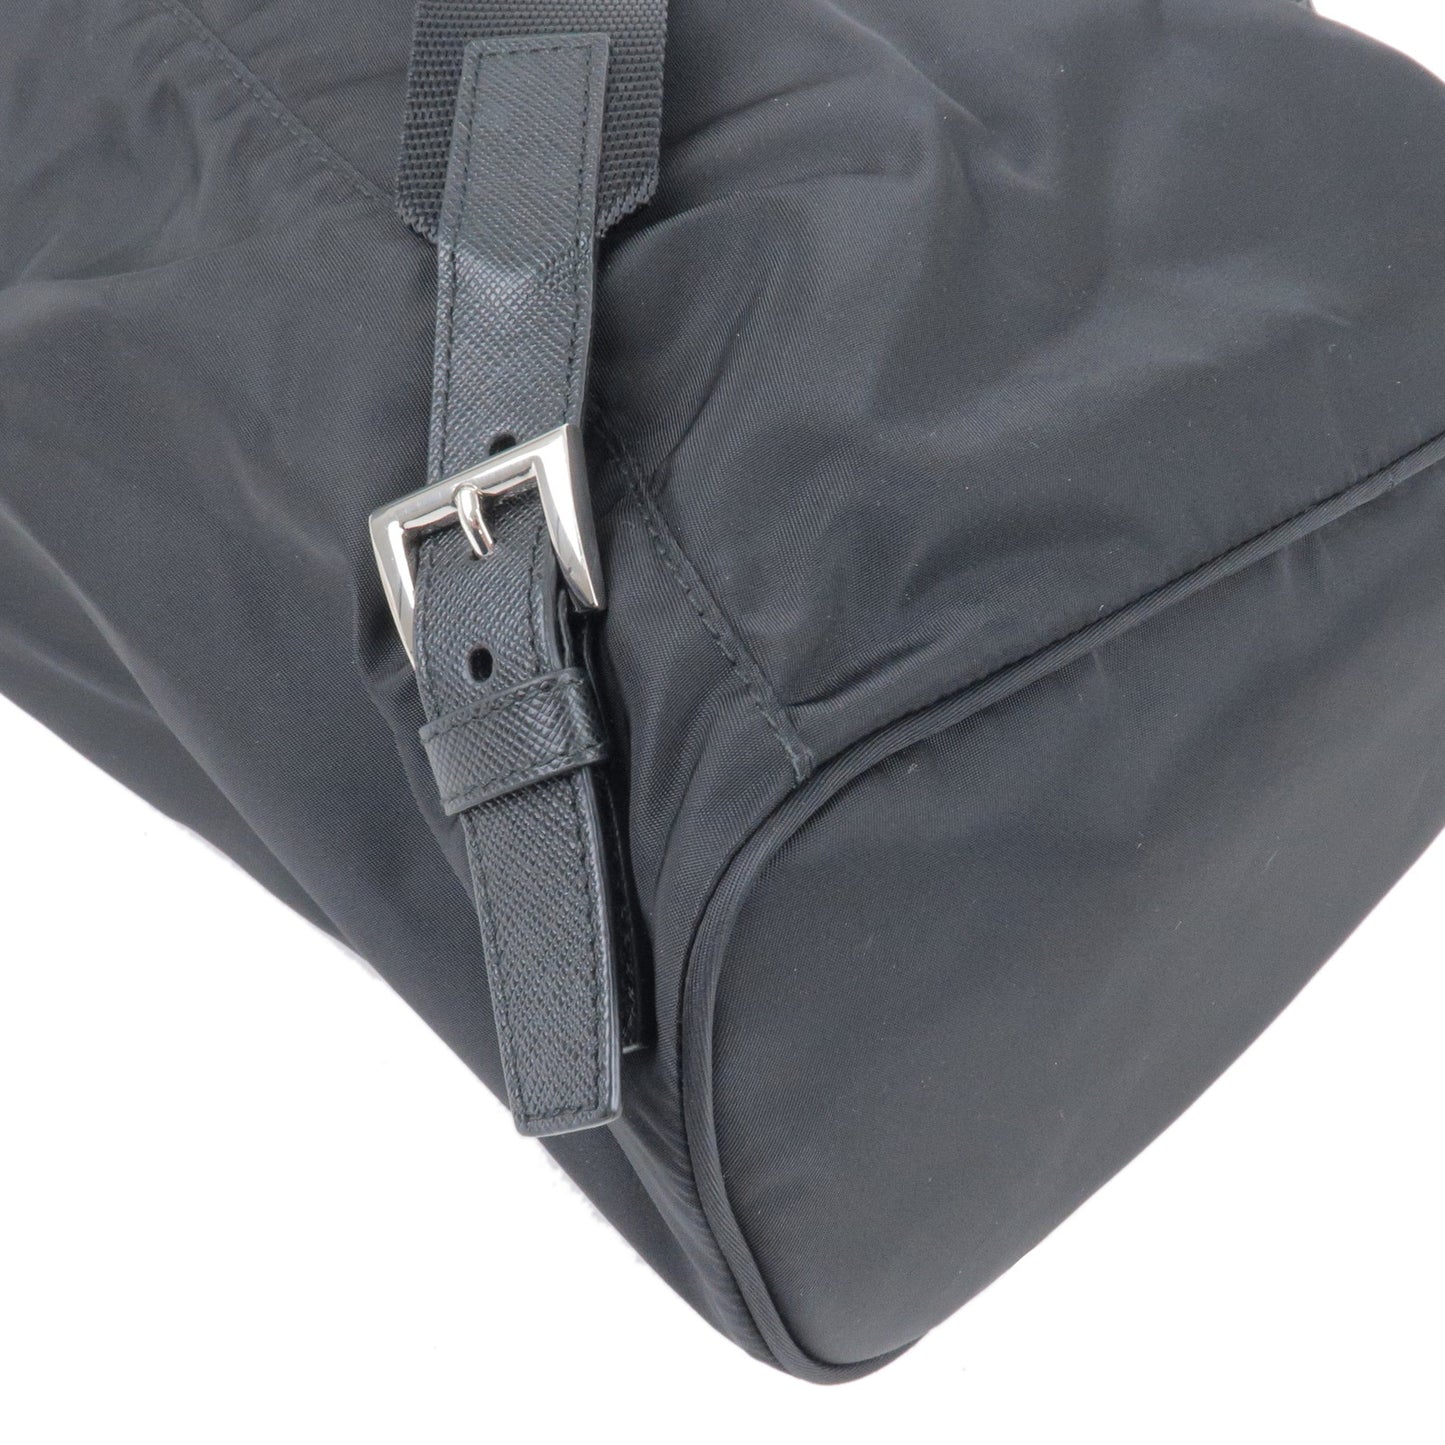 PRADA Logo Nylon Leather Back Pack Ruck Sack NERO Black